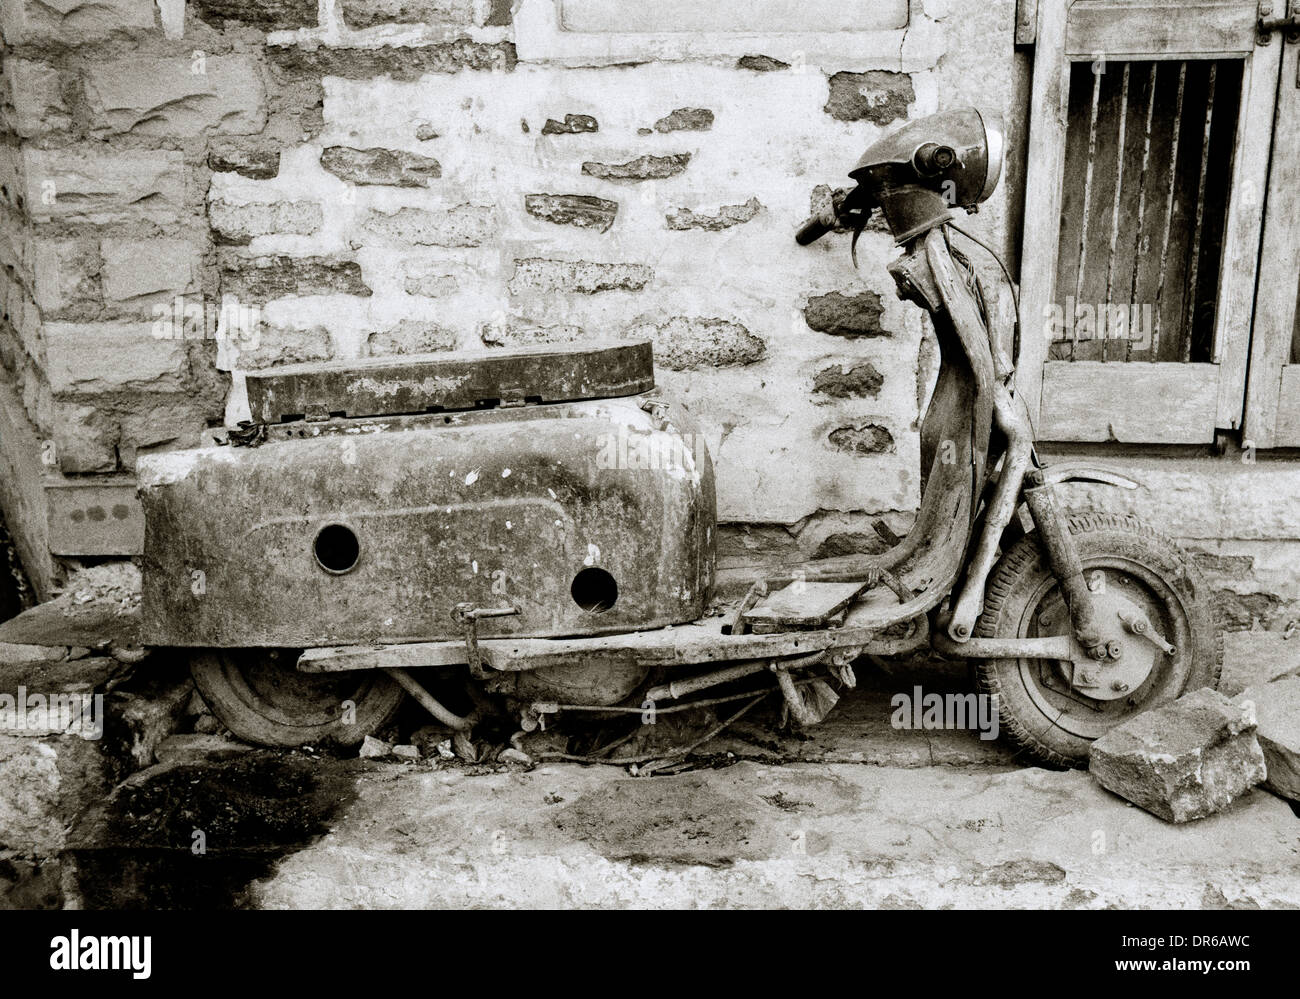 Dokumentarische Fotografie - Vespa Zerfall in Jodhpur, Rajasthan in Indien in Südasien. Moped Motorrad Street Scene Stockfoto